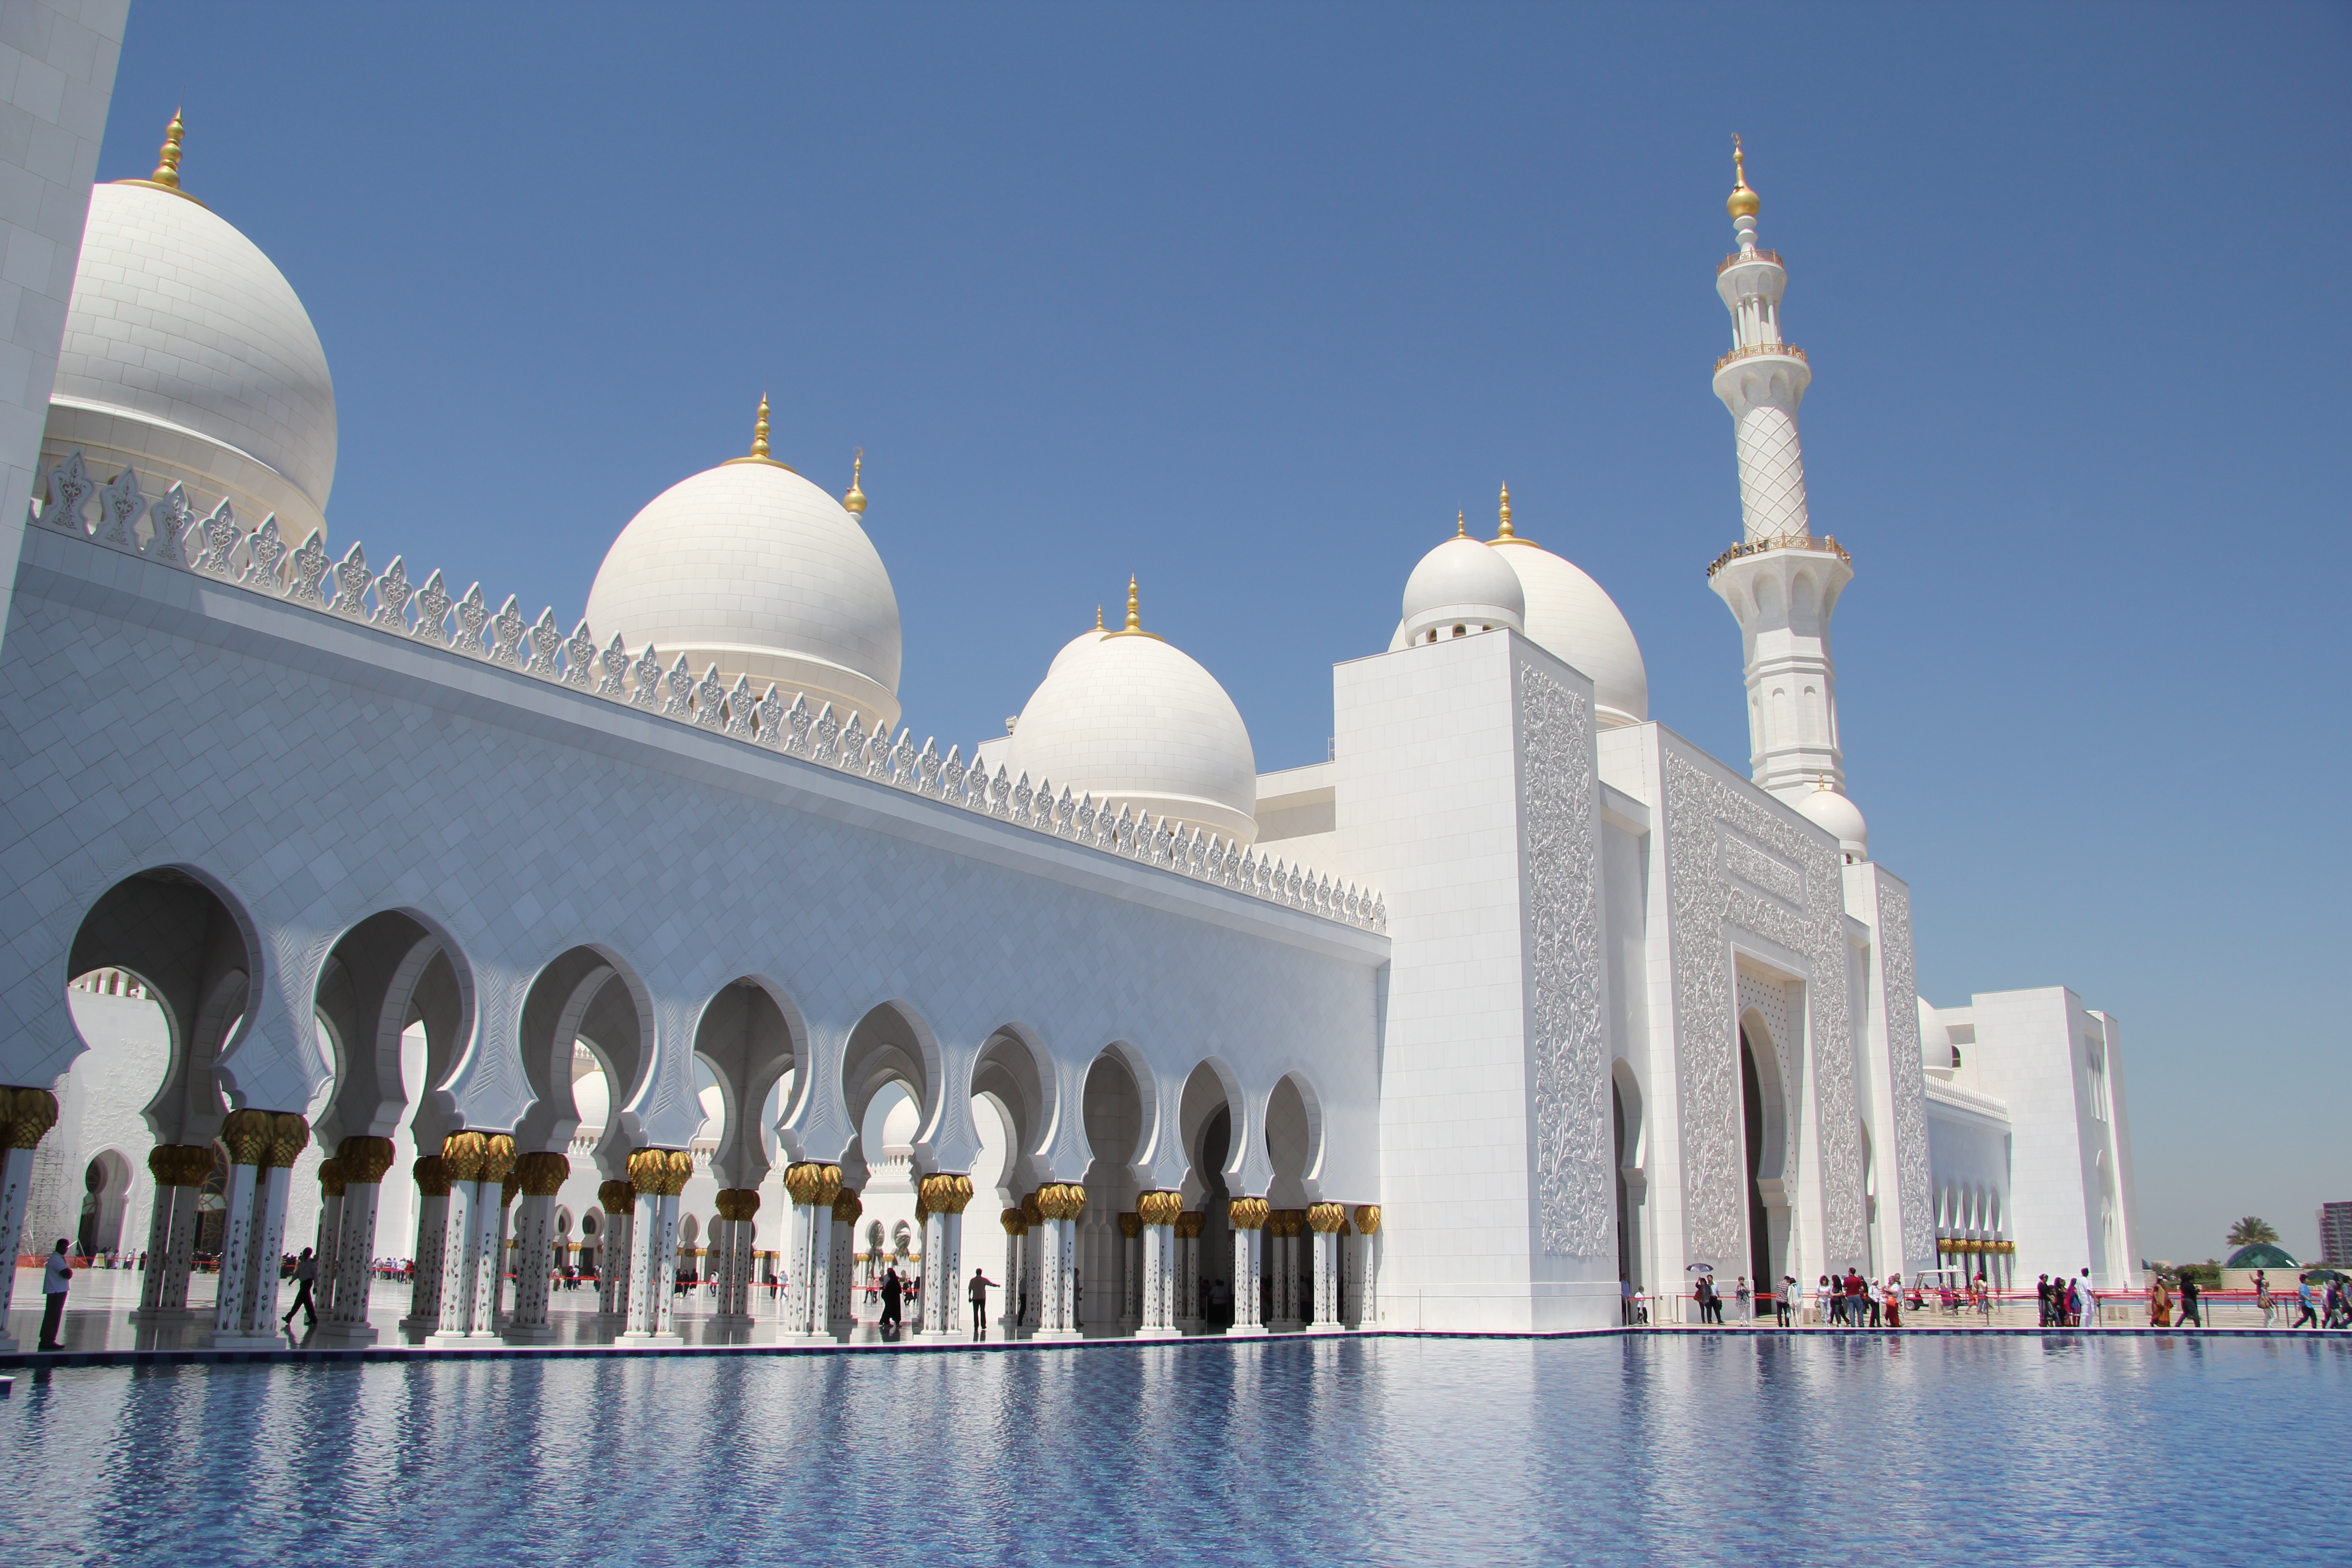 Арабские здания. Мечеть шейха Зайда Объединённые арабские эмираты. Мечеть в Абу Даби. Мечеть шейха Зайда. Мечеть шейха Зайда в Абу-Даби, ОАЭ.